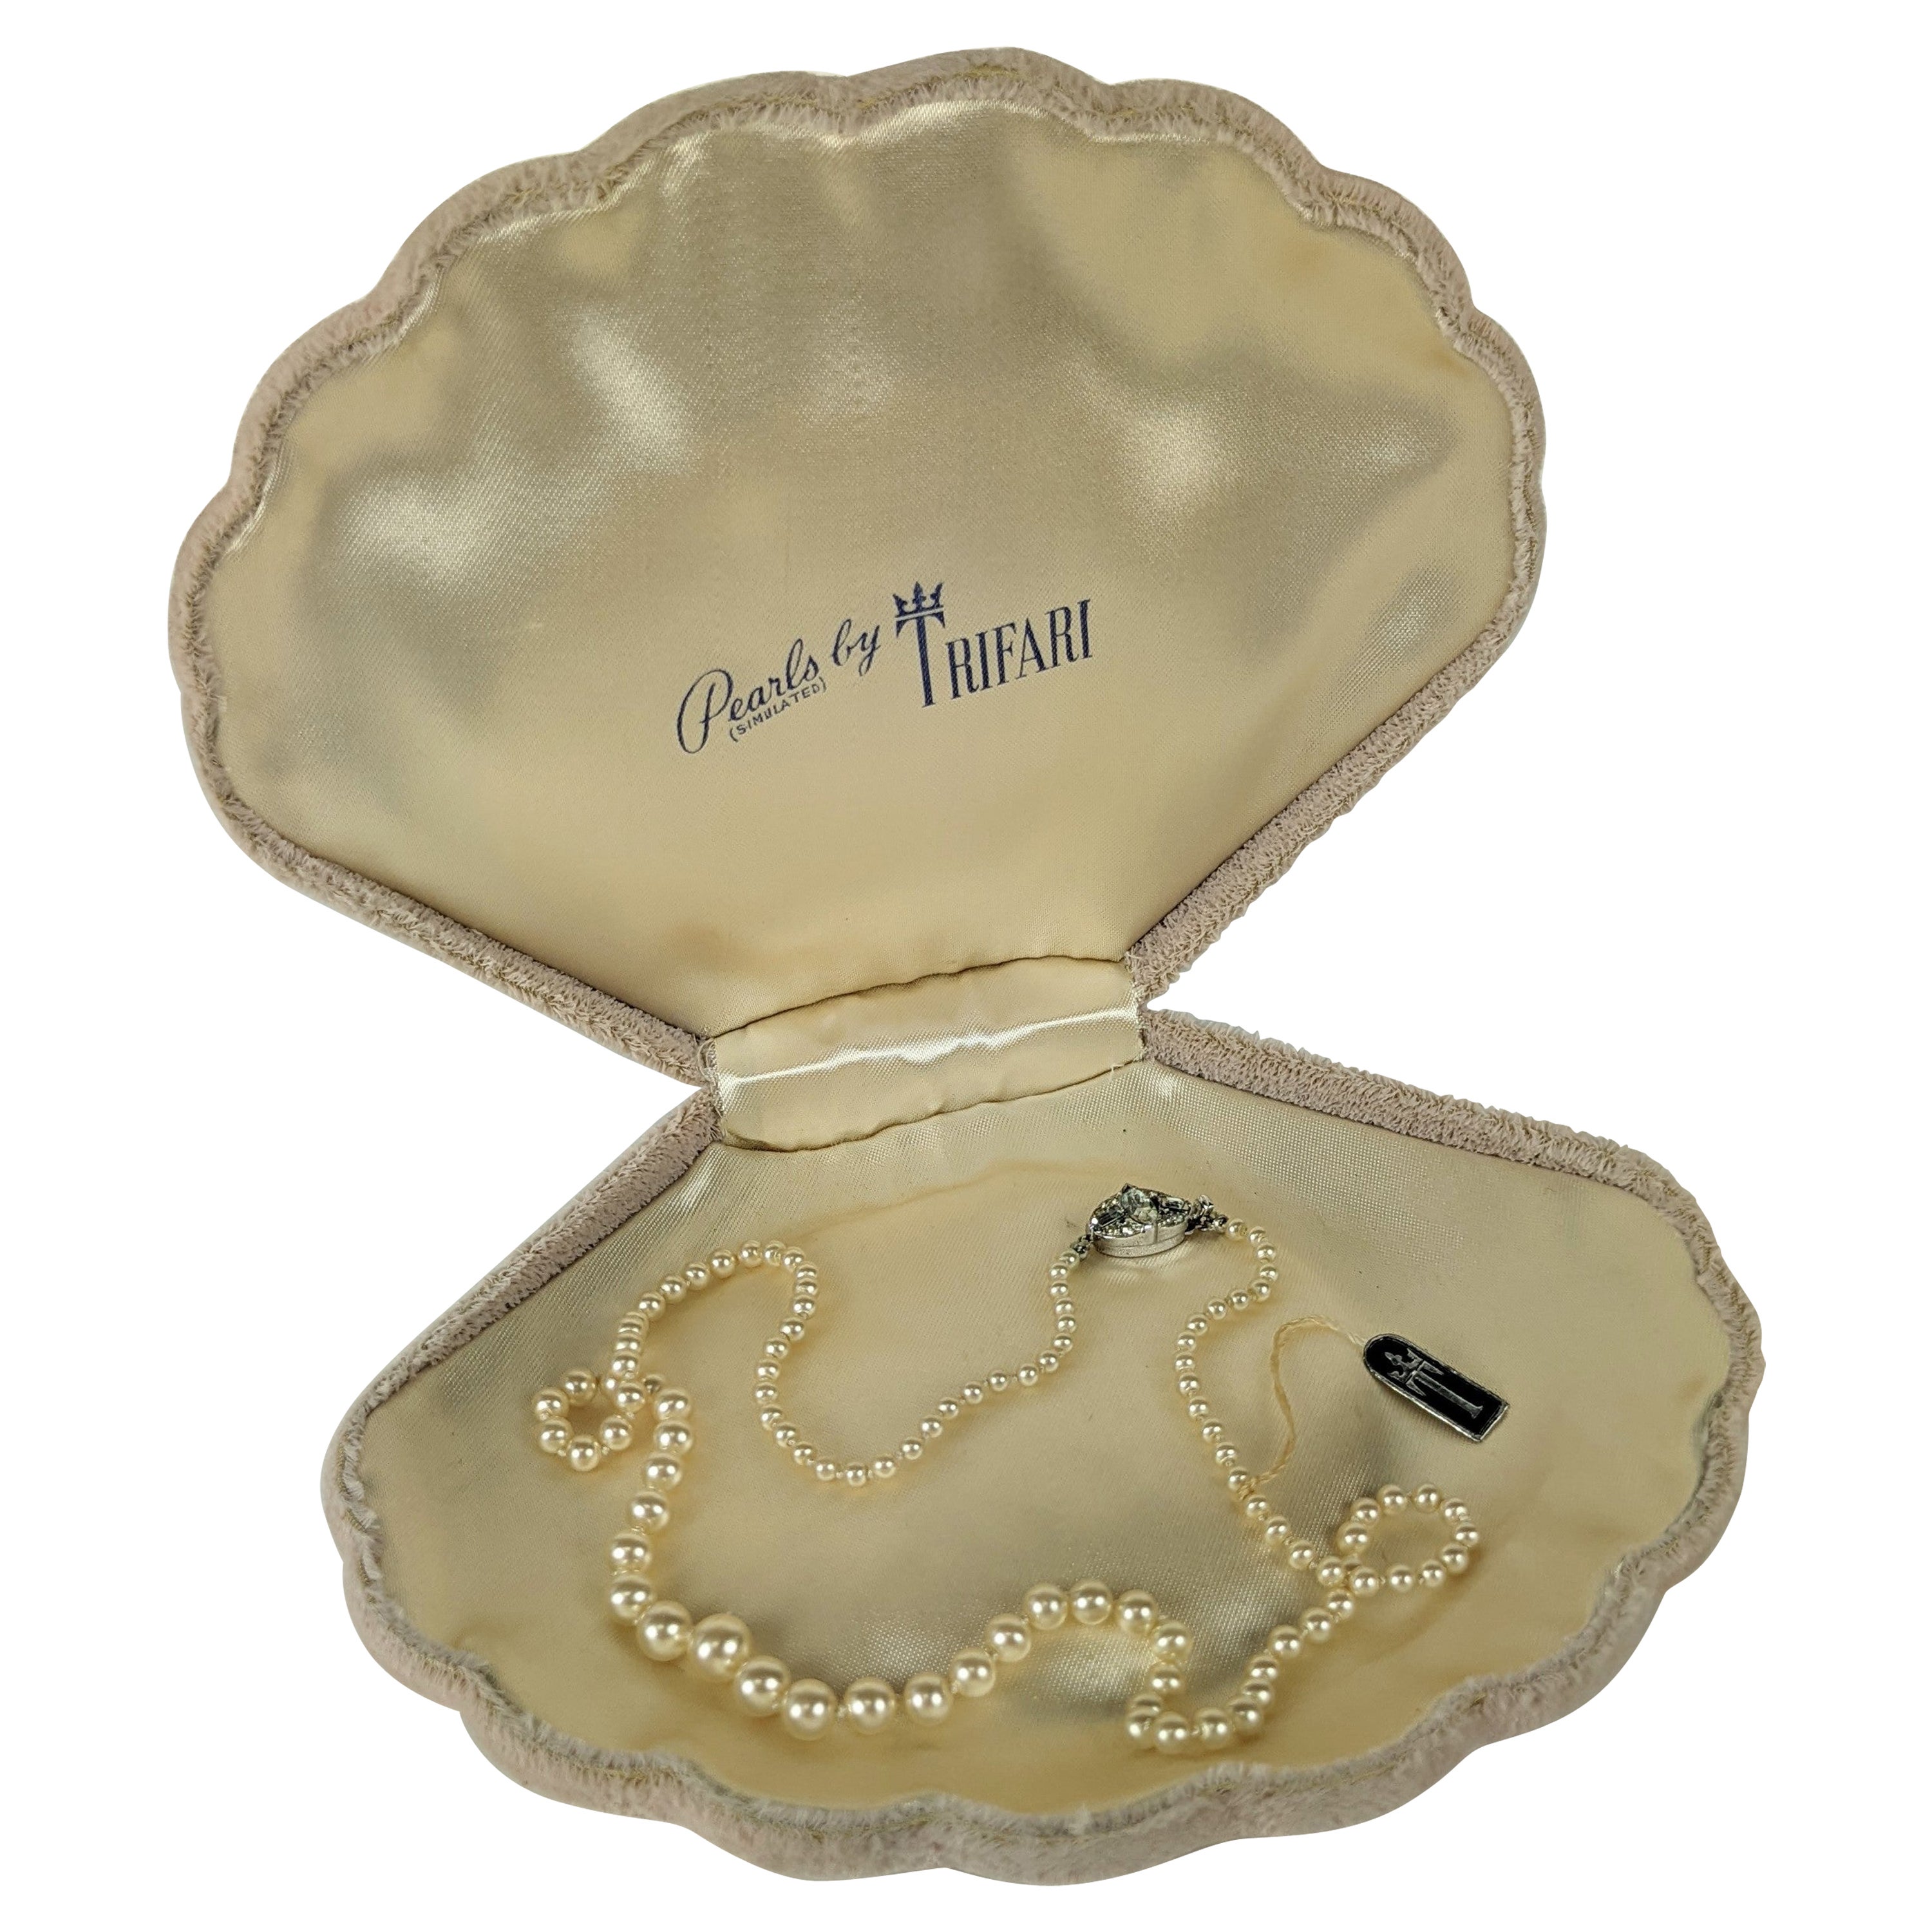 Trifari Faux Pearls, Original Box For Sale